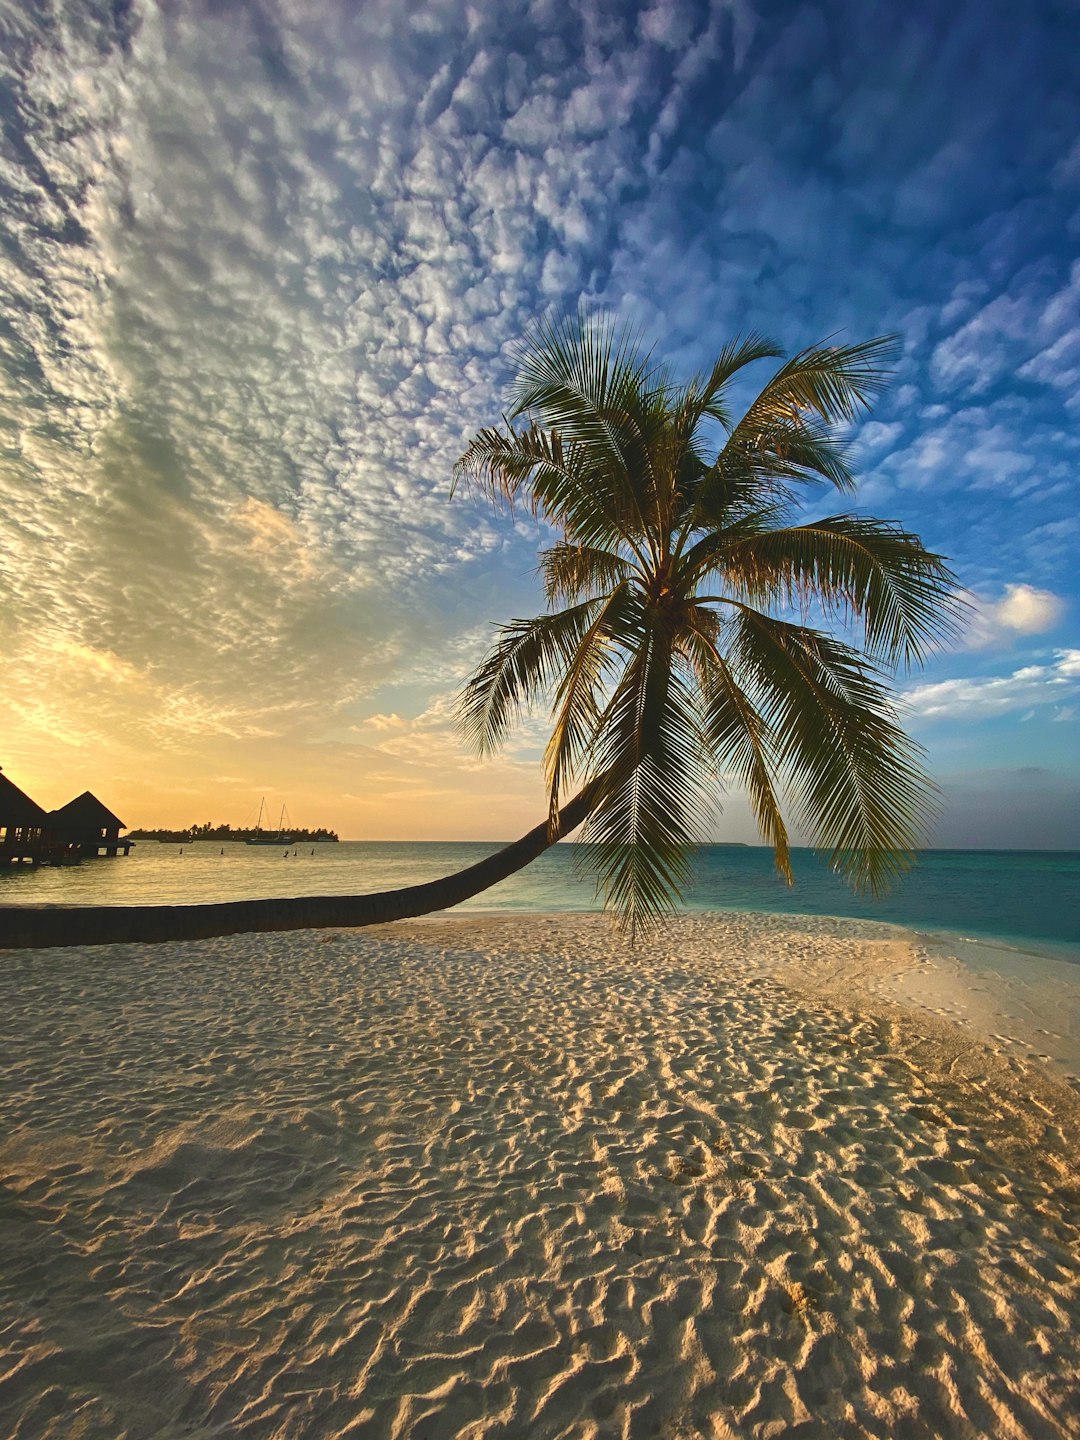 travelers stories about Beach in Maldive Islands, Maldives